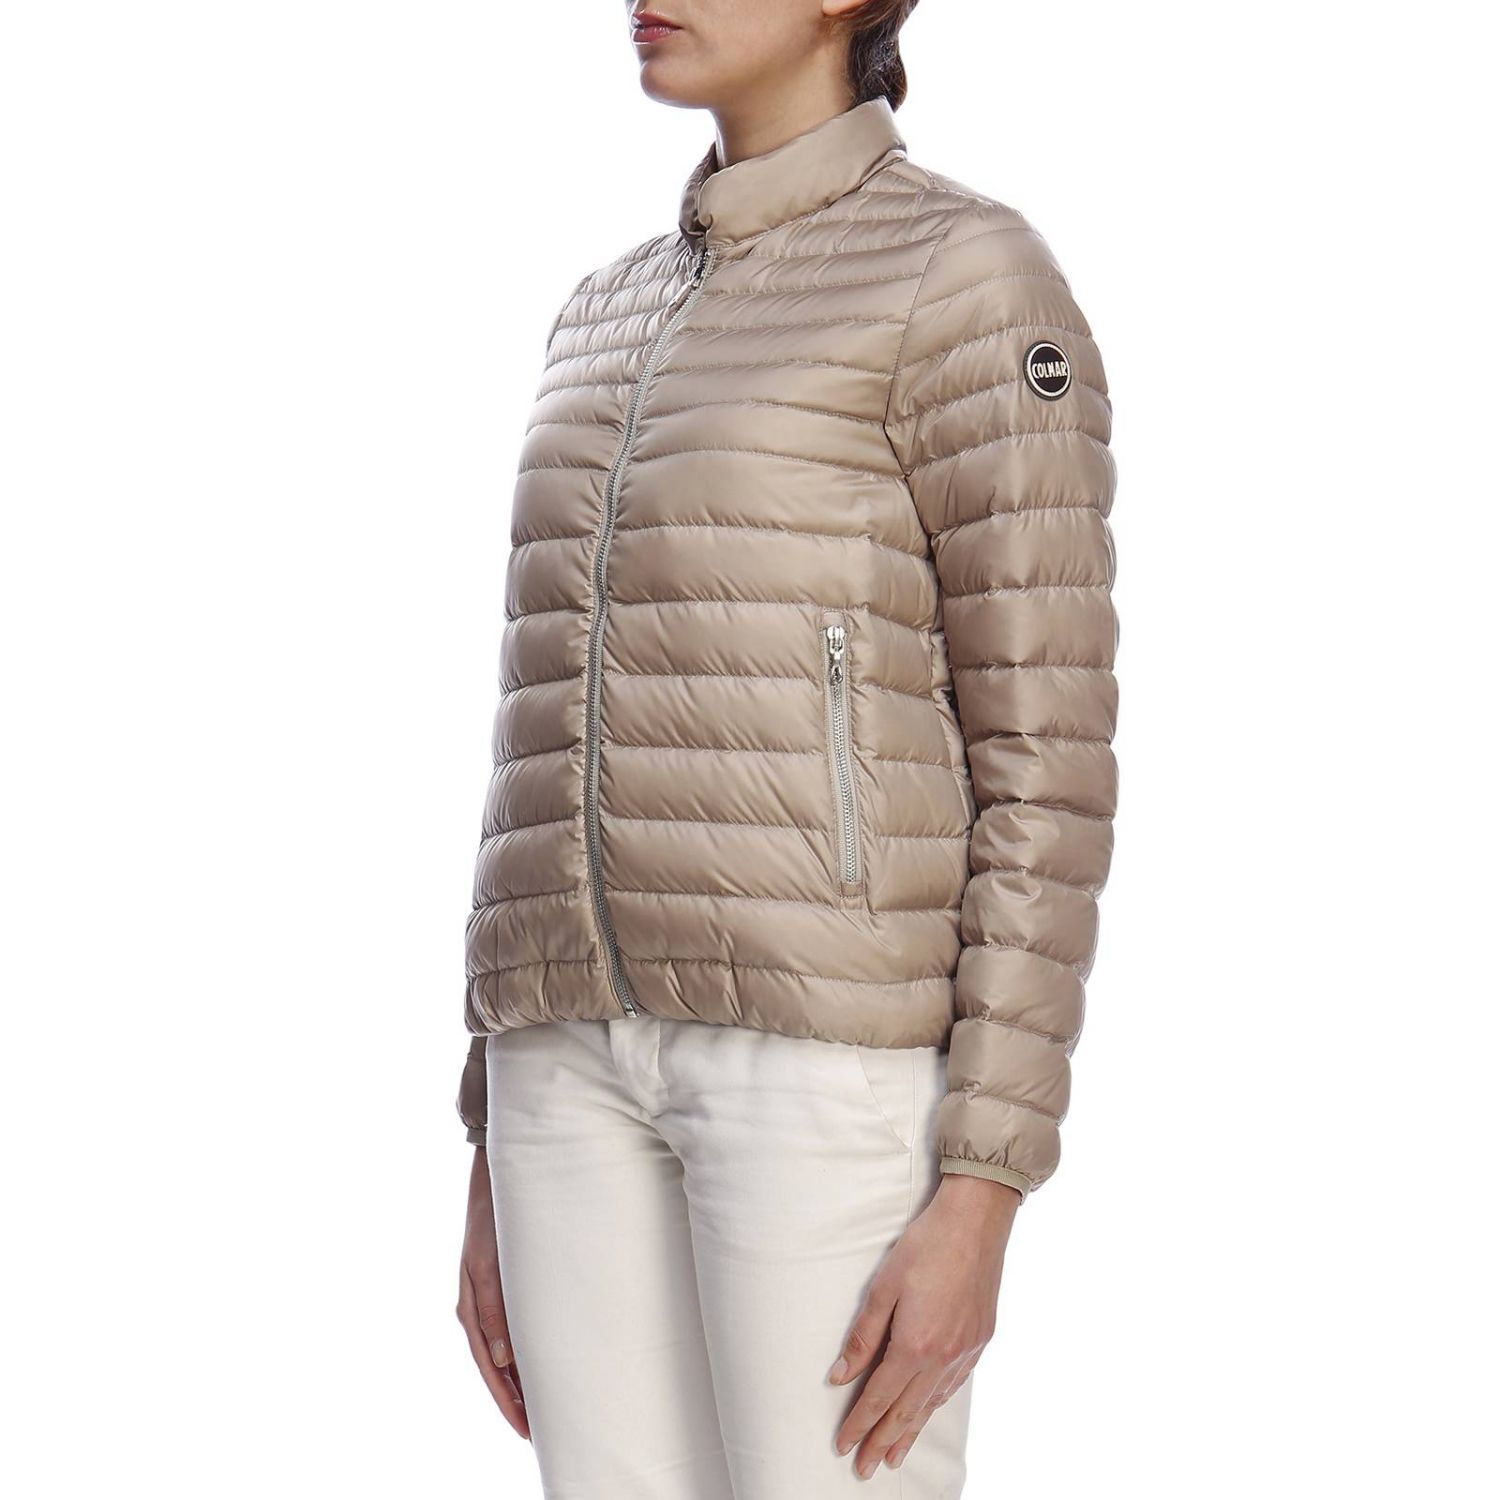 Colmar Outlet: jacket for woman - Beige | Colmar jacket 2170 1MQ online ...